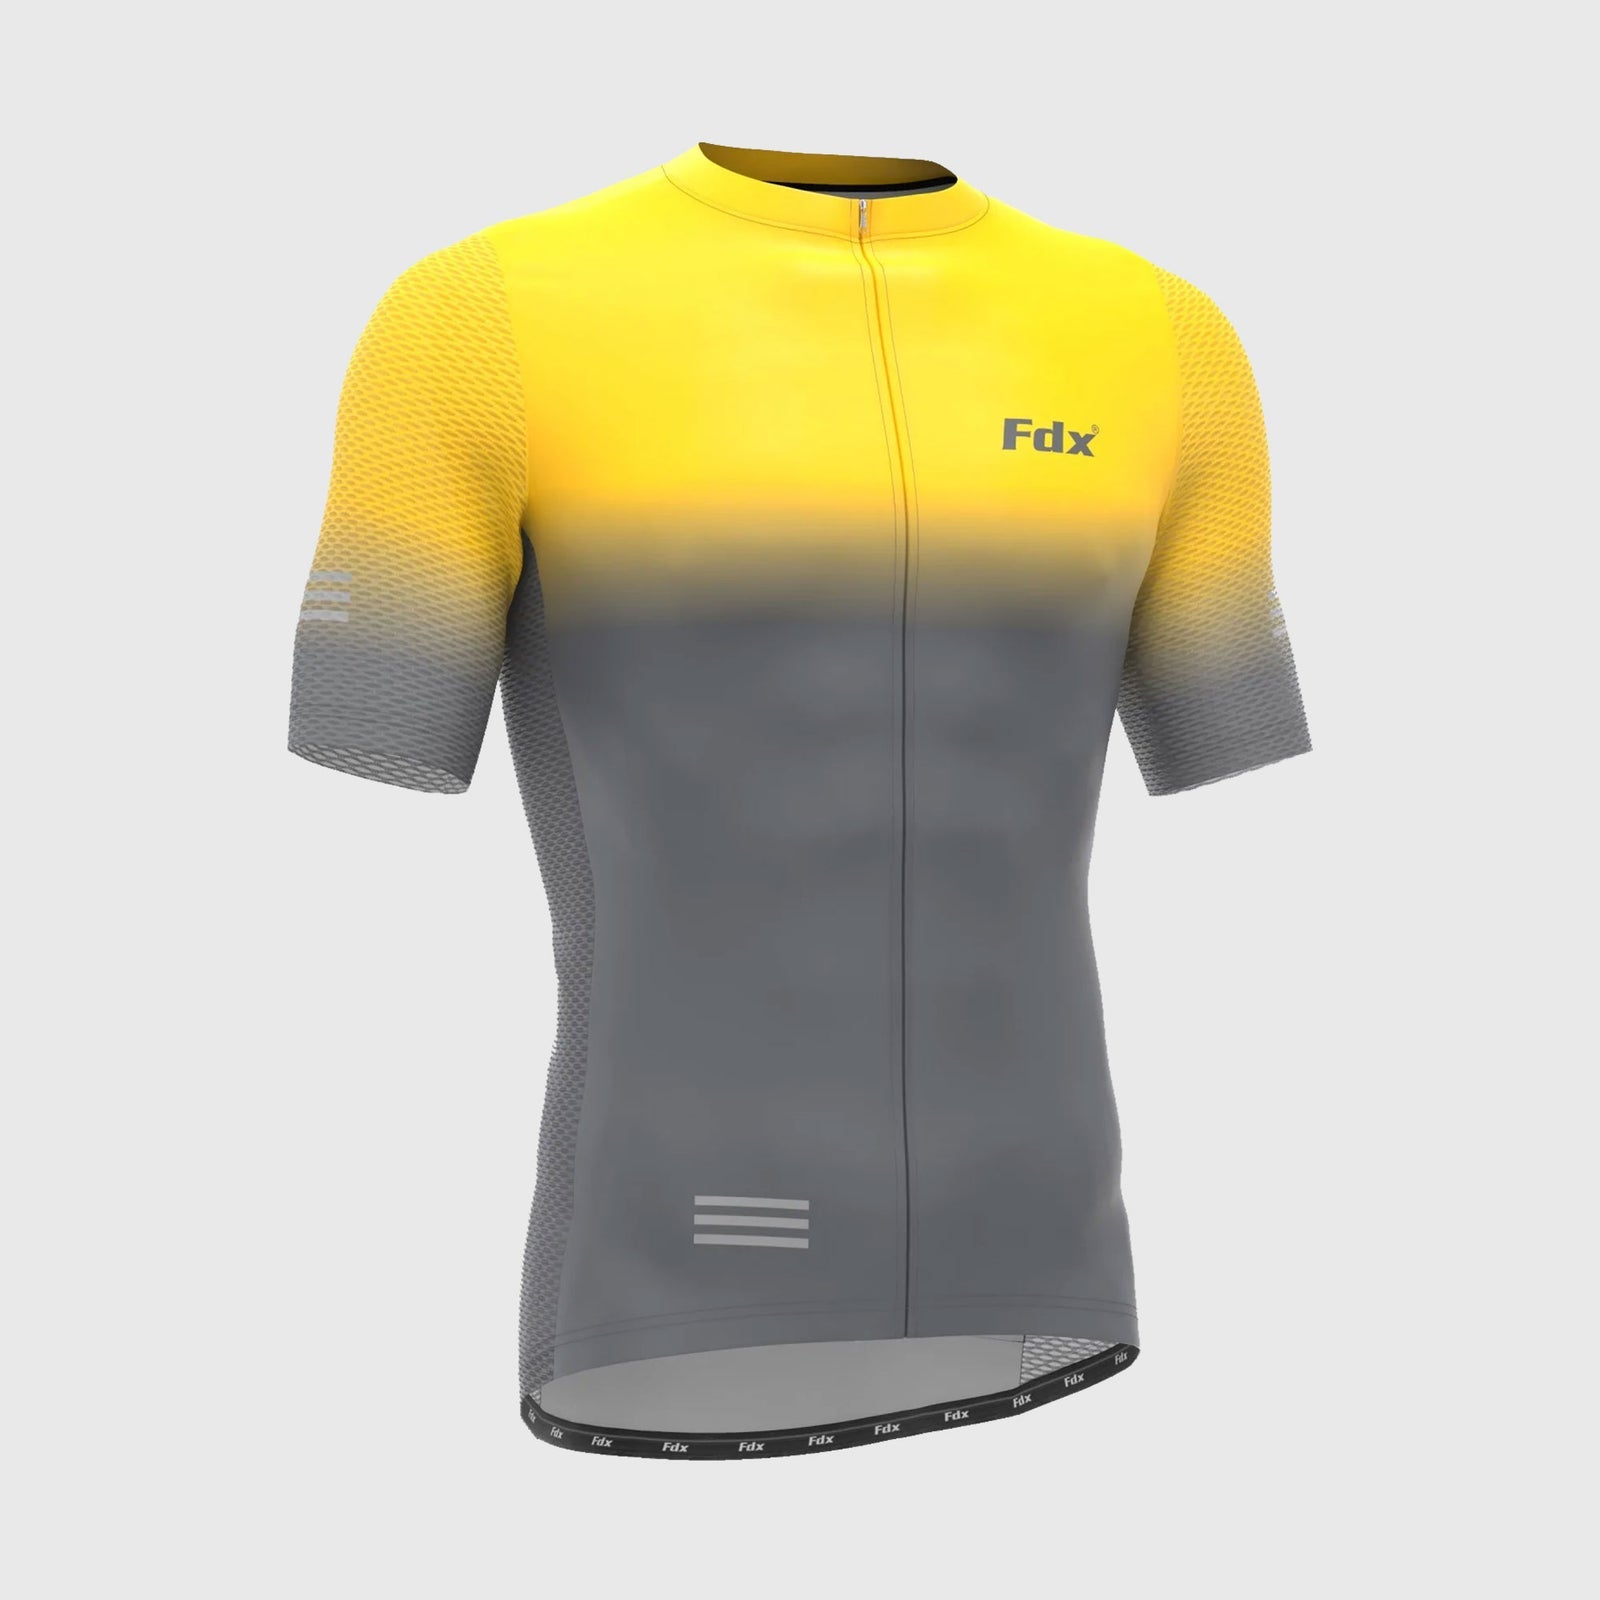 Fdx Mens Grey & Yellow Short Sleeve Cycling Jersey for Summer Best Road Bike Wear Top Light Weight, Full Zipper, Pockets & Hi-viz Reflectors - Duo